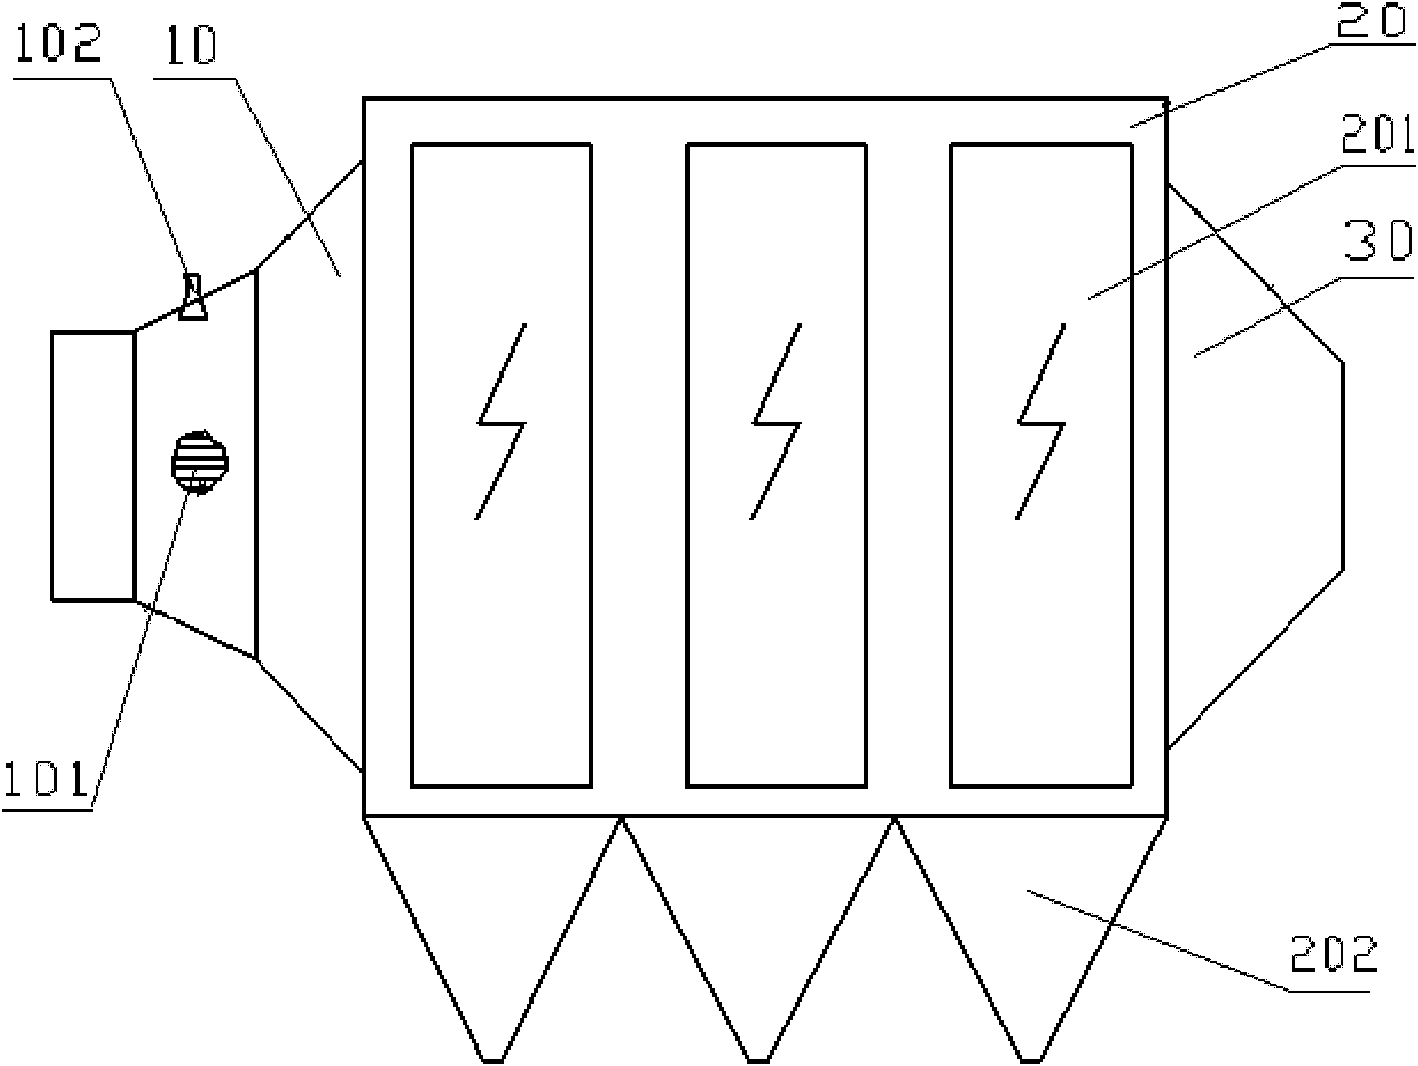 A flue gas dedusting system and its electric precipitator